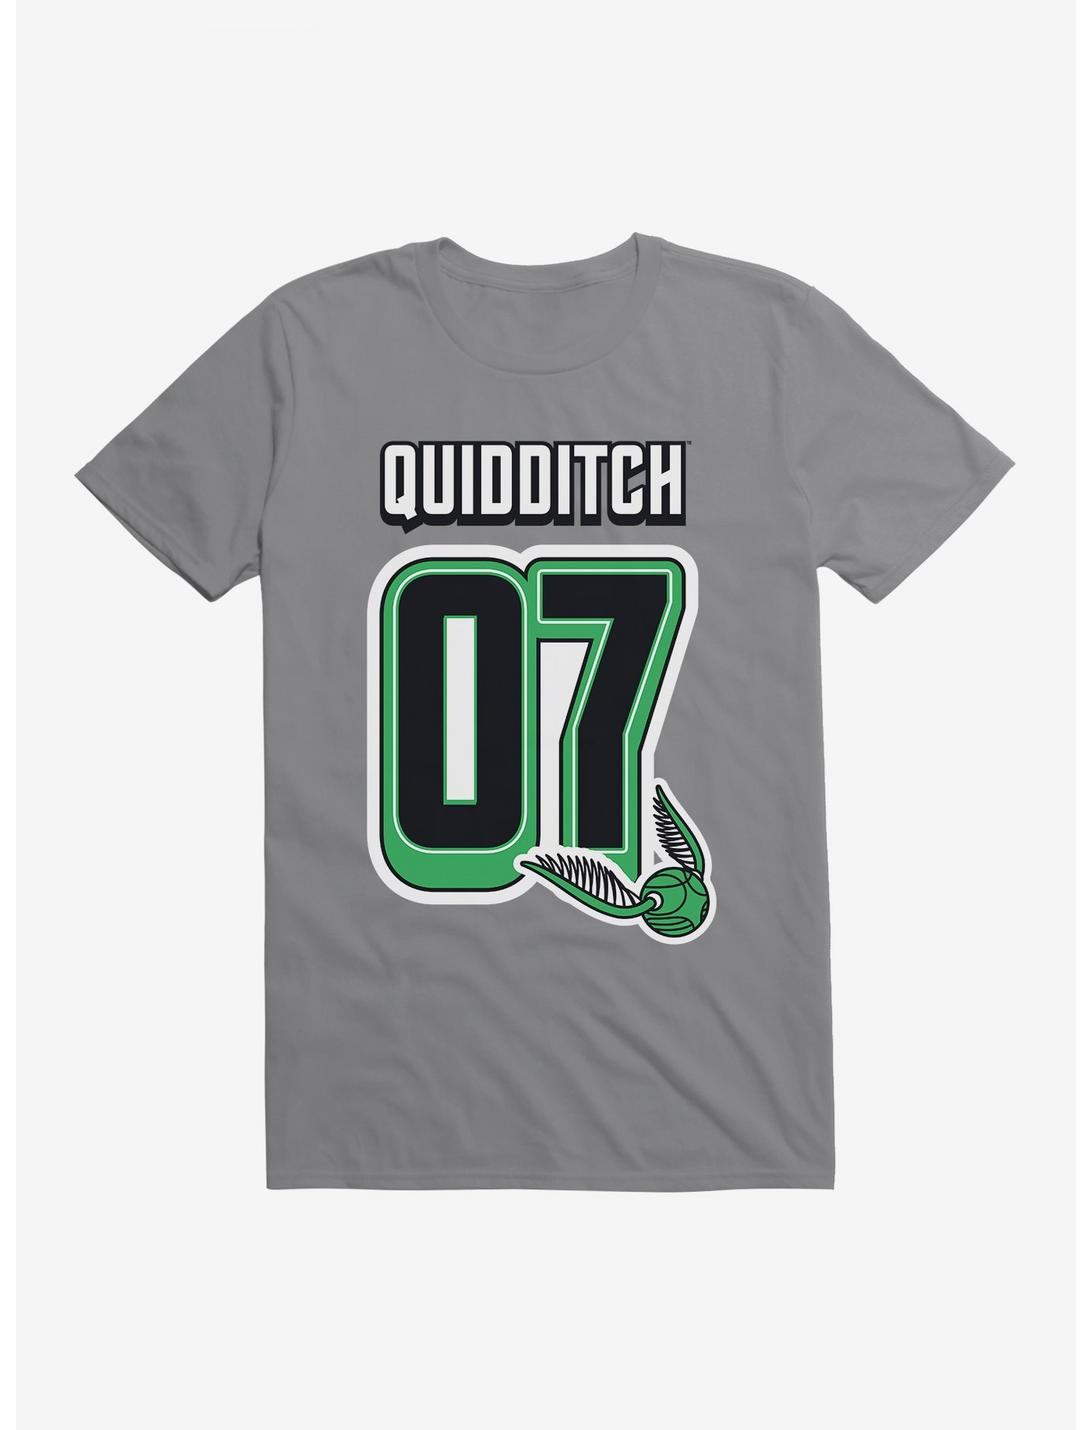 Harry Potter Quidditch 07 Patch Art T-Shirt, , hi-res